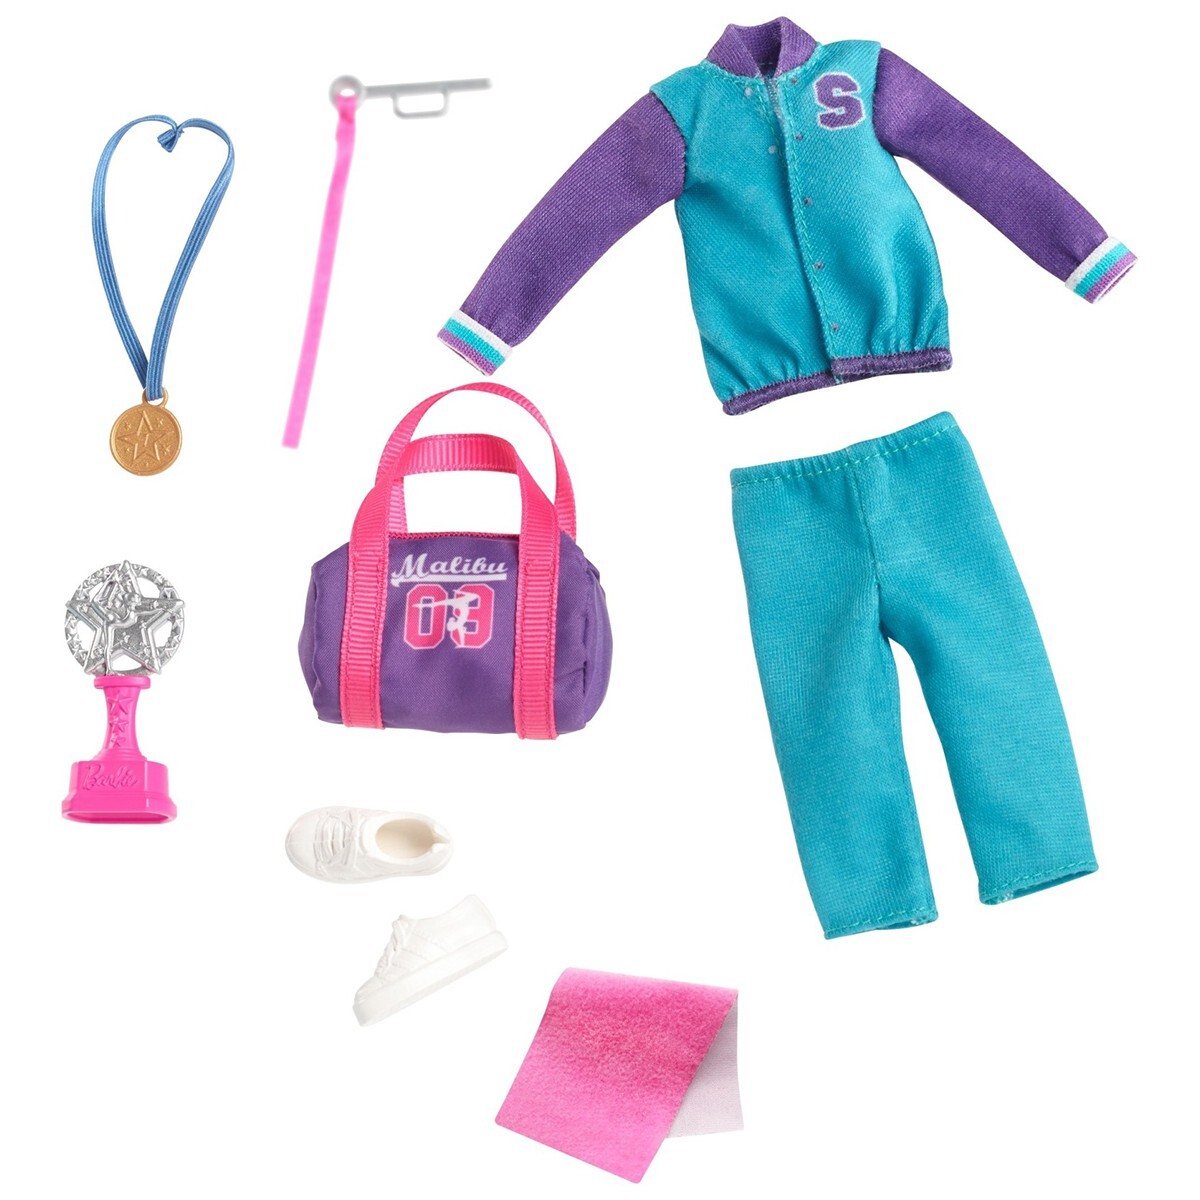 Barbie Stacie Team Doll+Accessories -GBK59